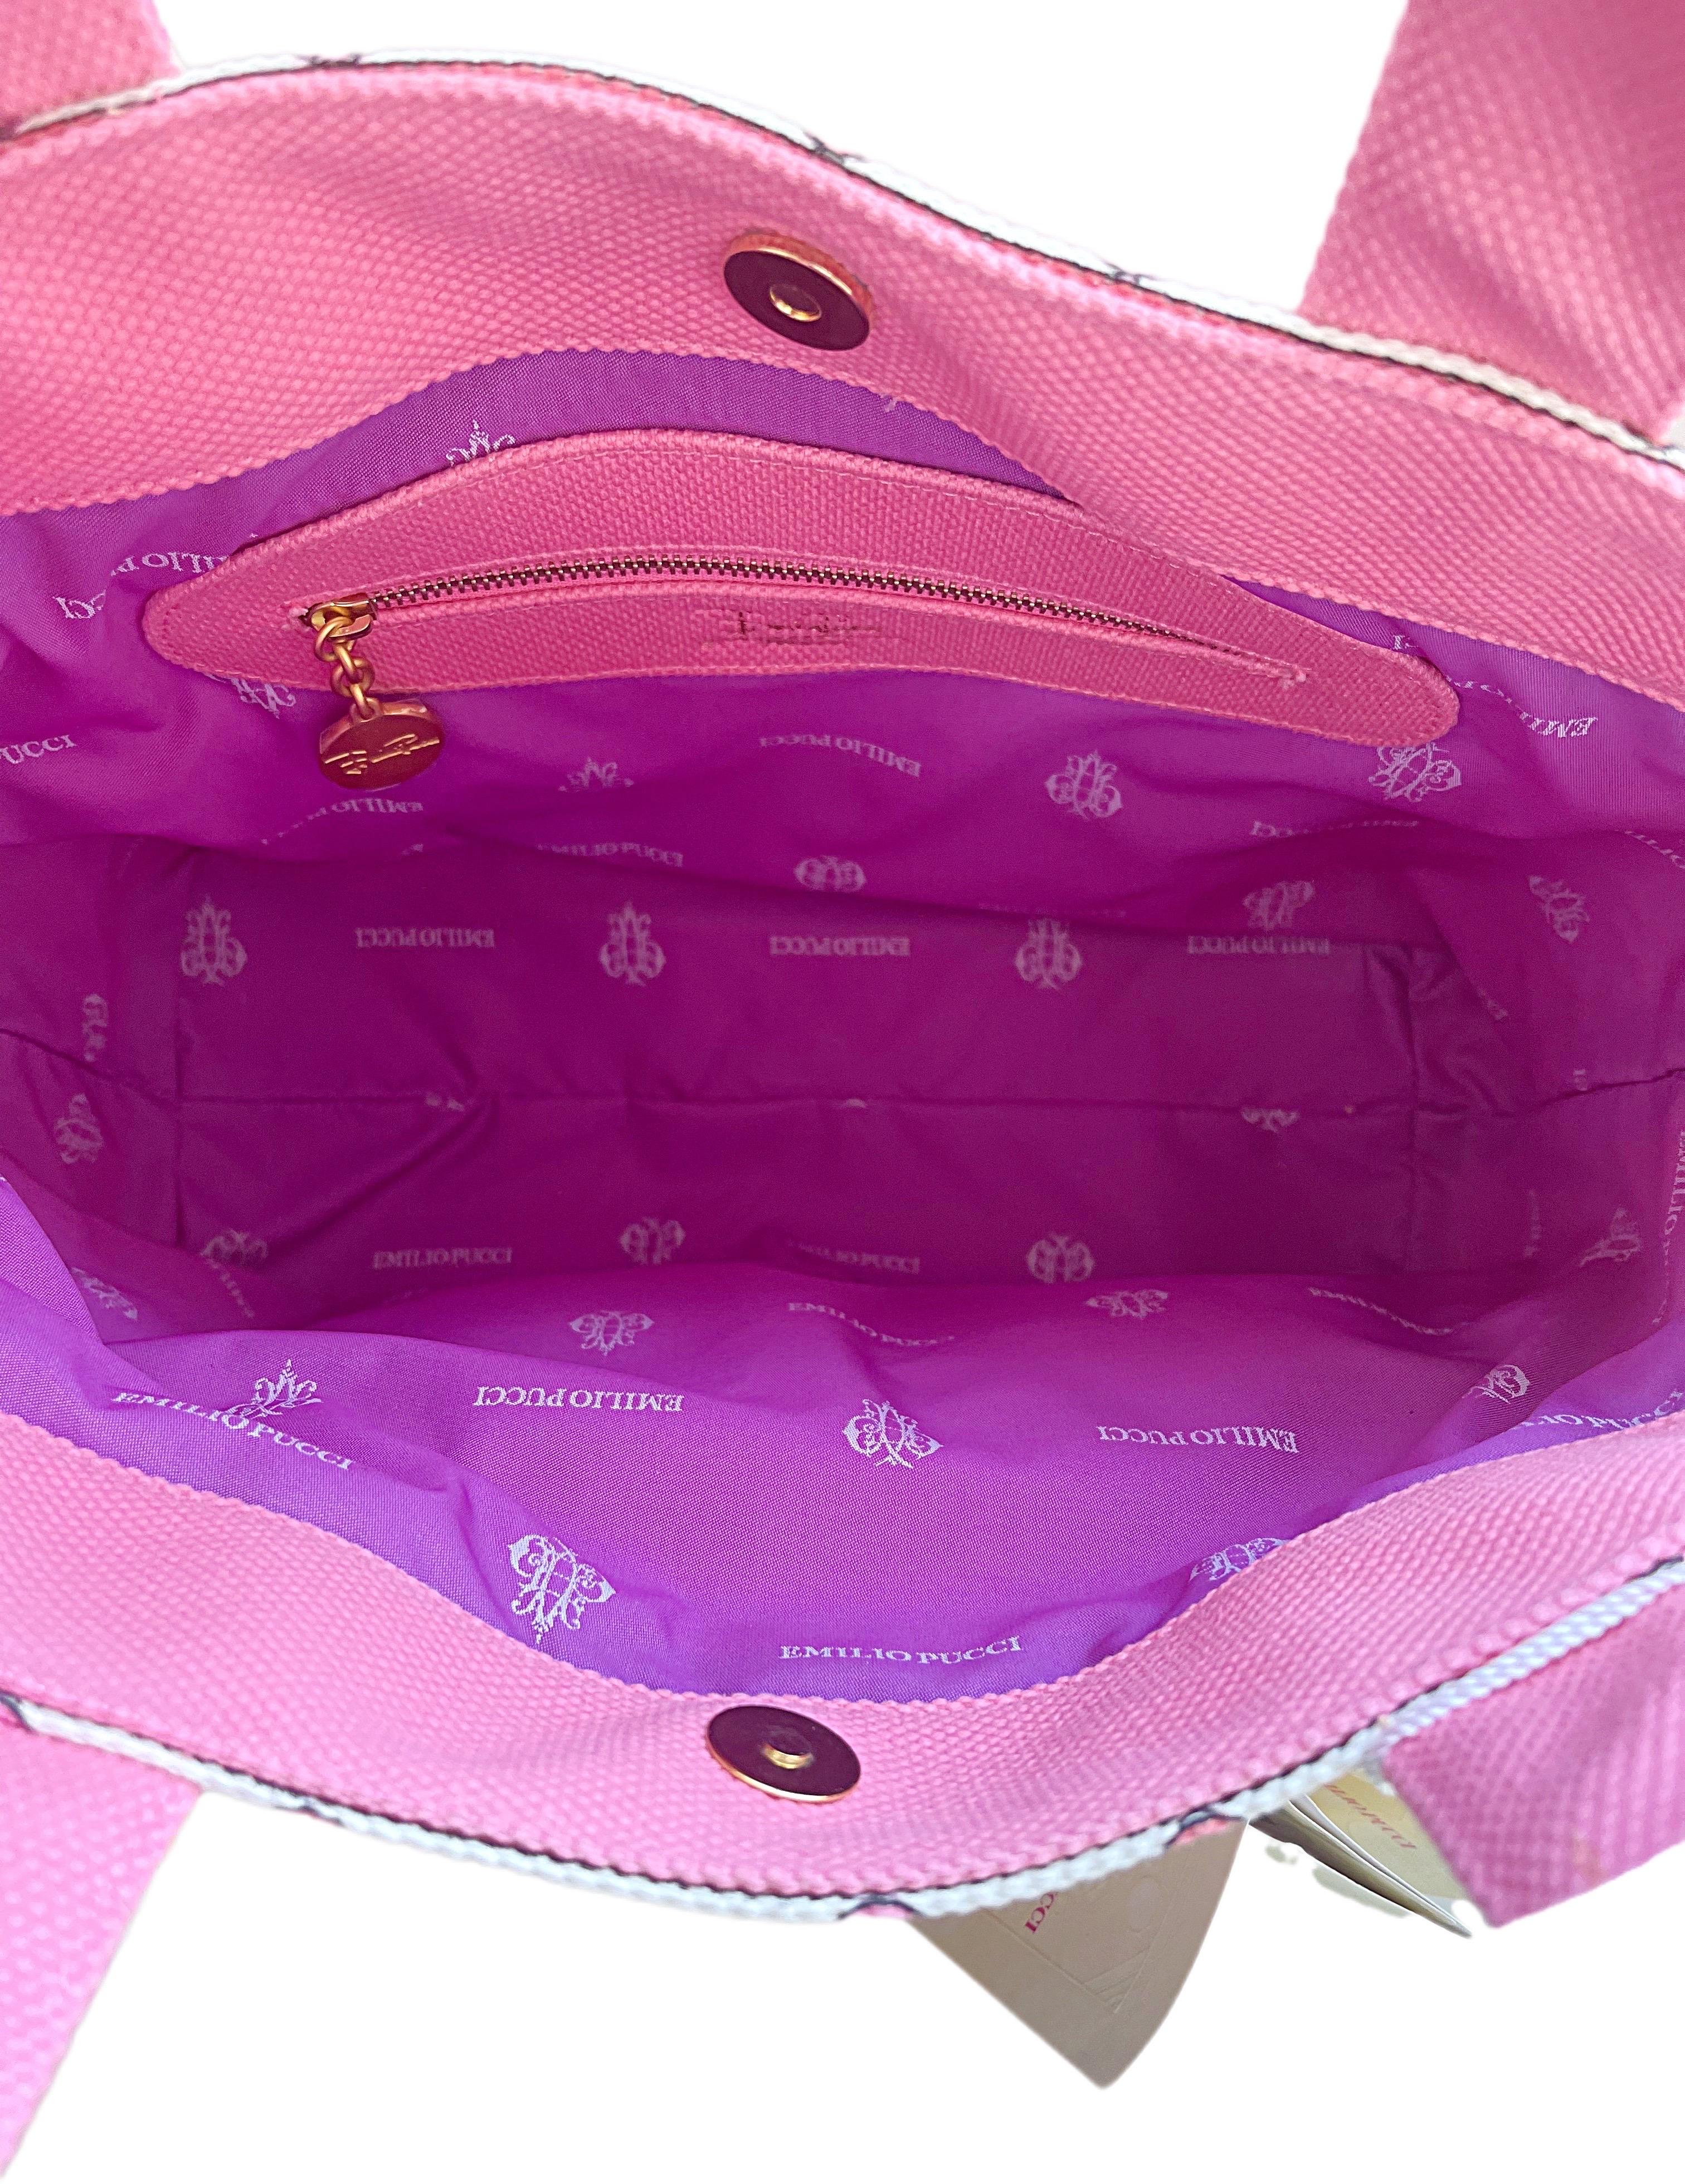 NWT Emilio Pucci 2000s Bubblegum Pink Kaleidoscope Mosaic Satchel Handbag Purse For Sale 3